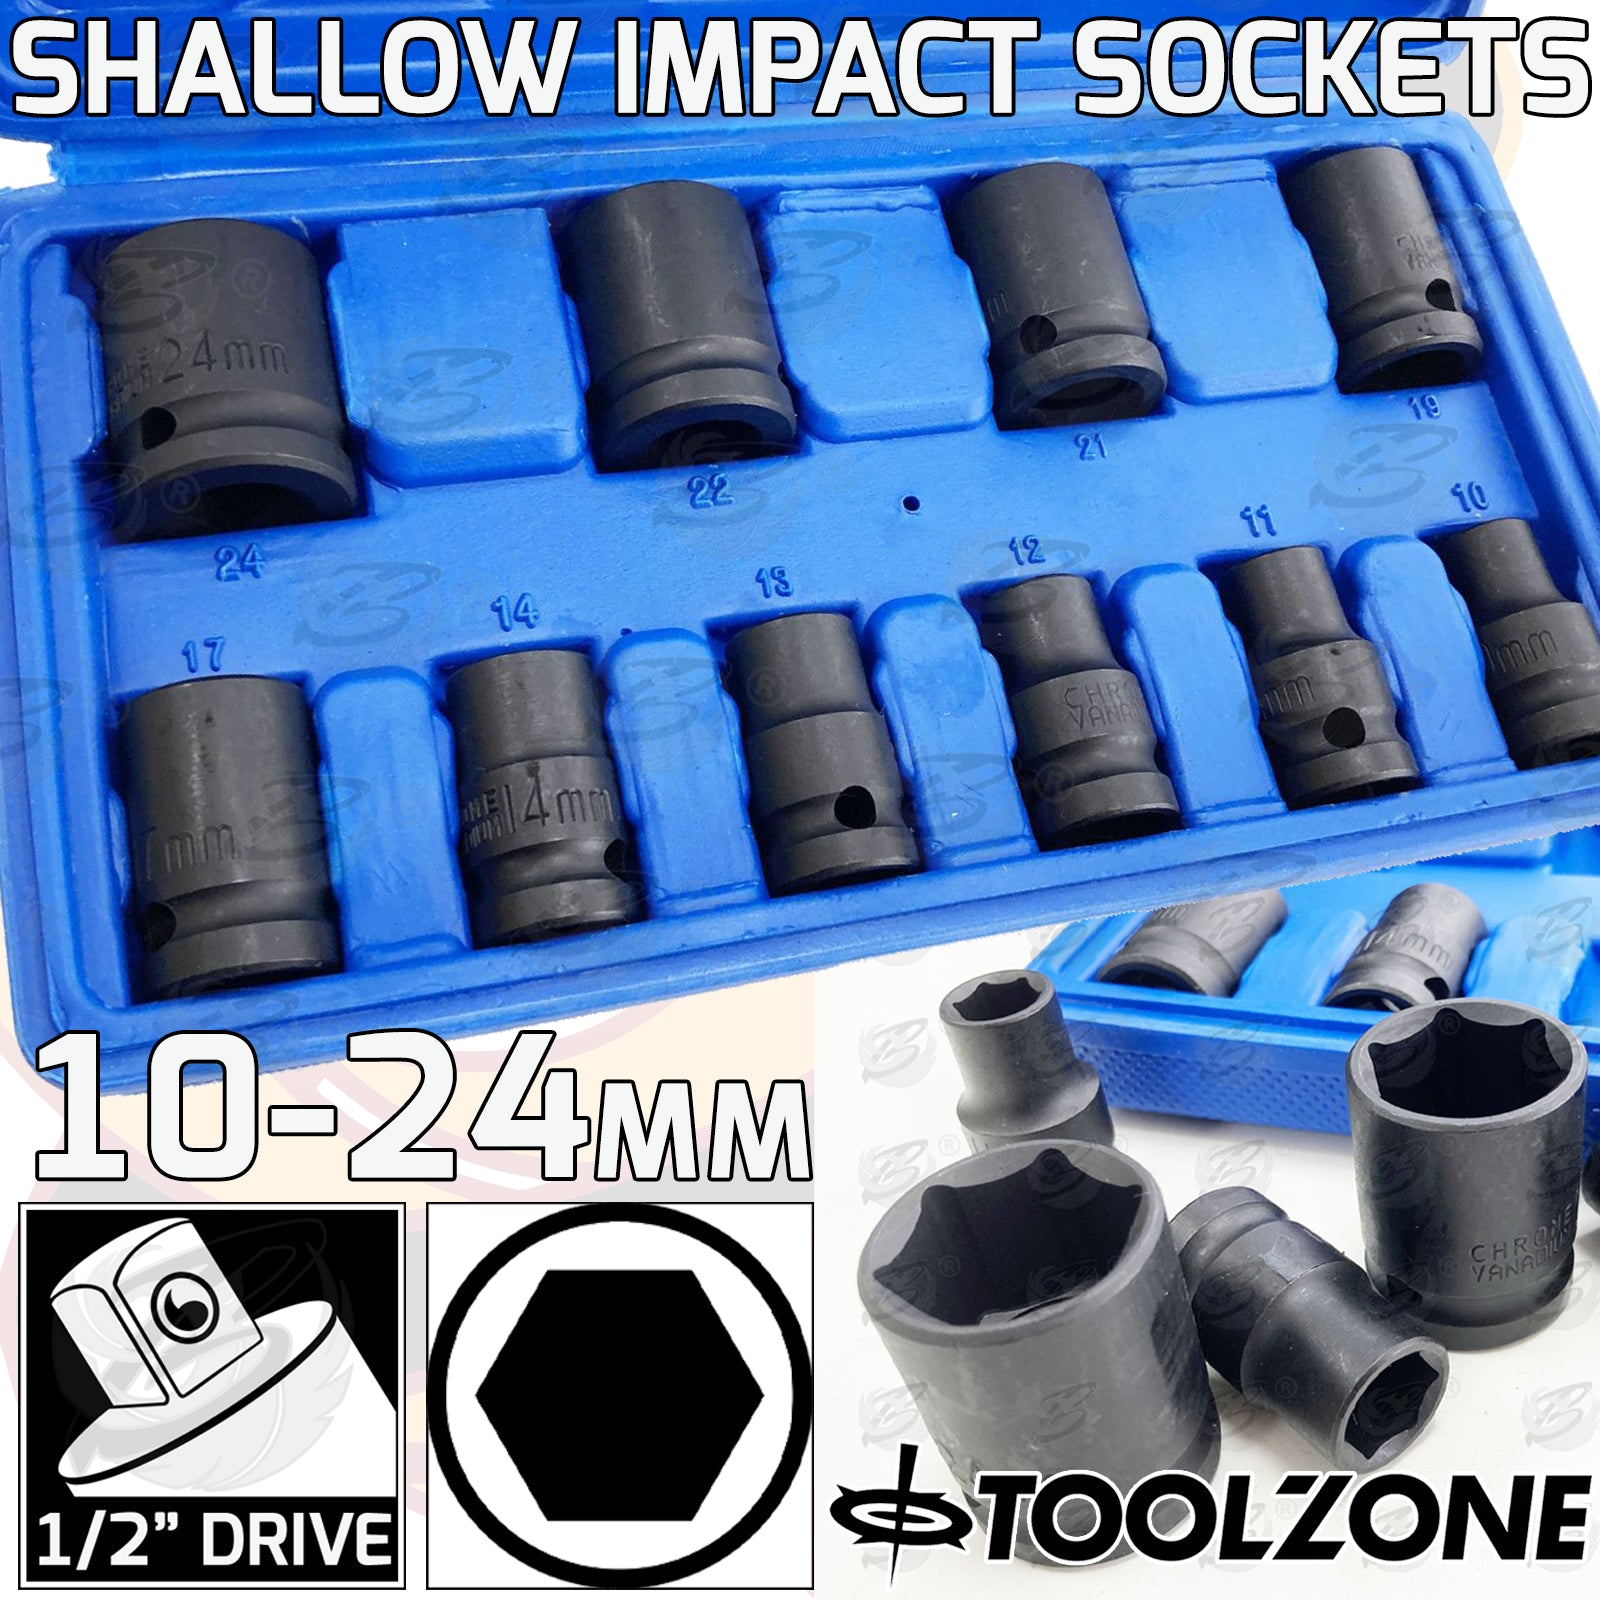 TOOLZONE 10PCS 1/2" DRIVE 6 POINT SHALLOW IMPACT SOCKETS 10MM - 24MM